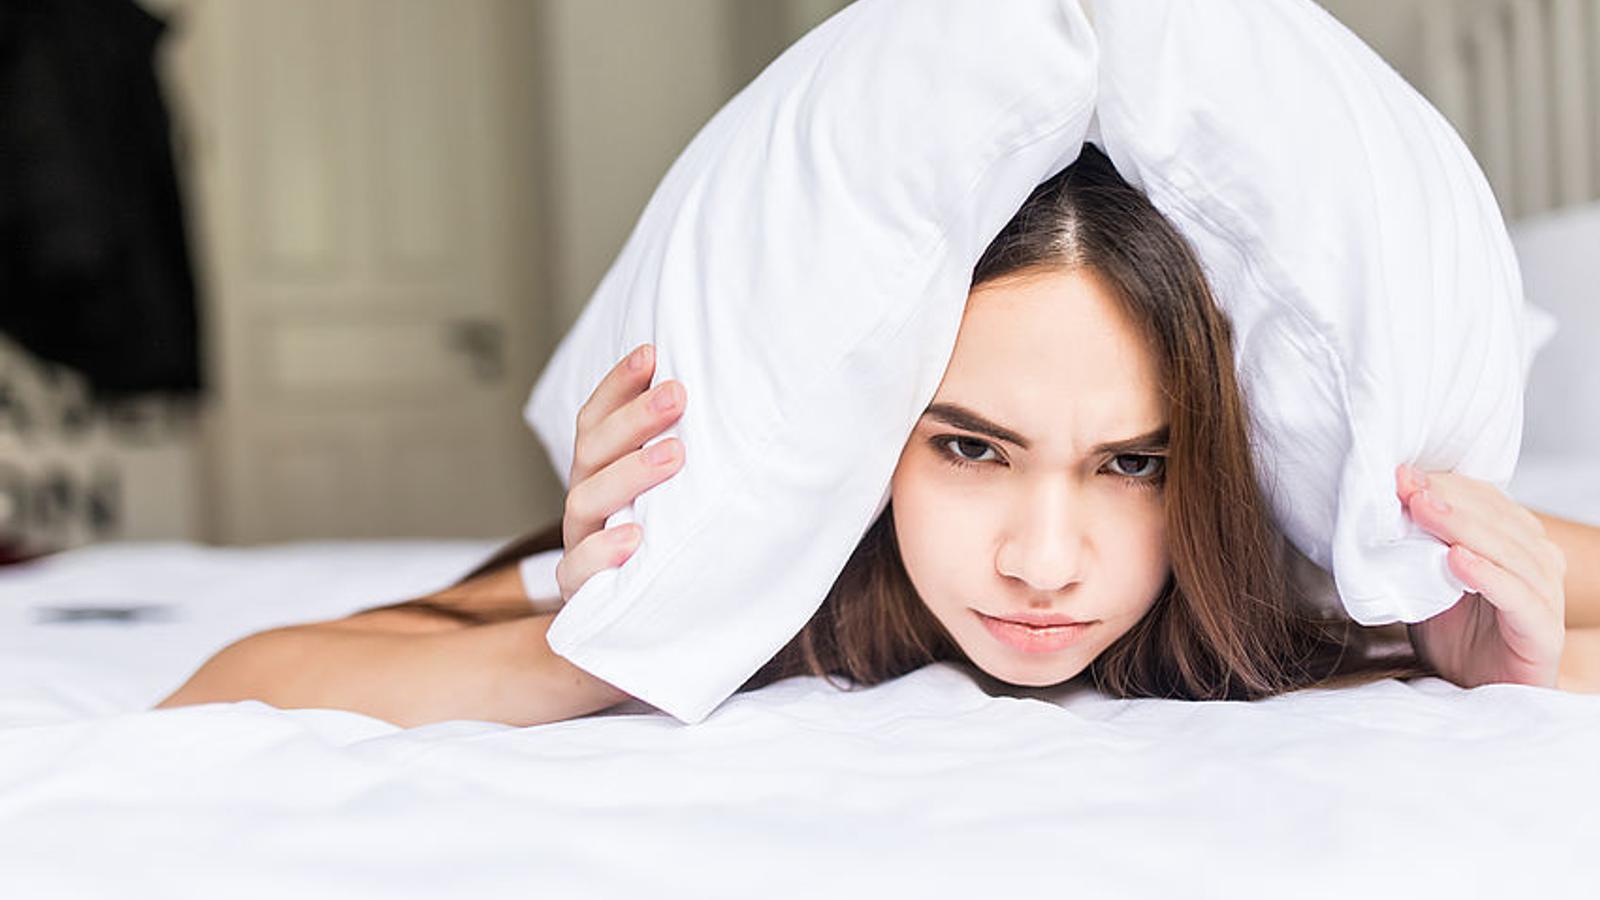 Frau mit Sex-Schmerzen liegt frustriert im Bett